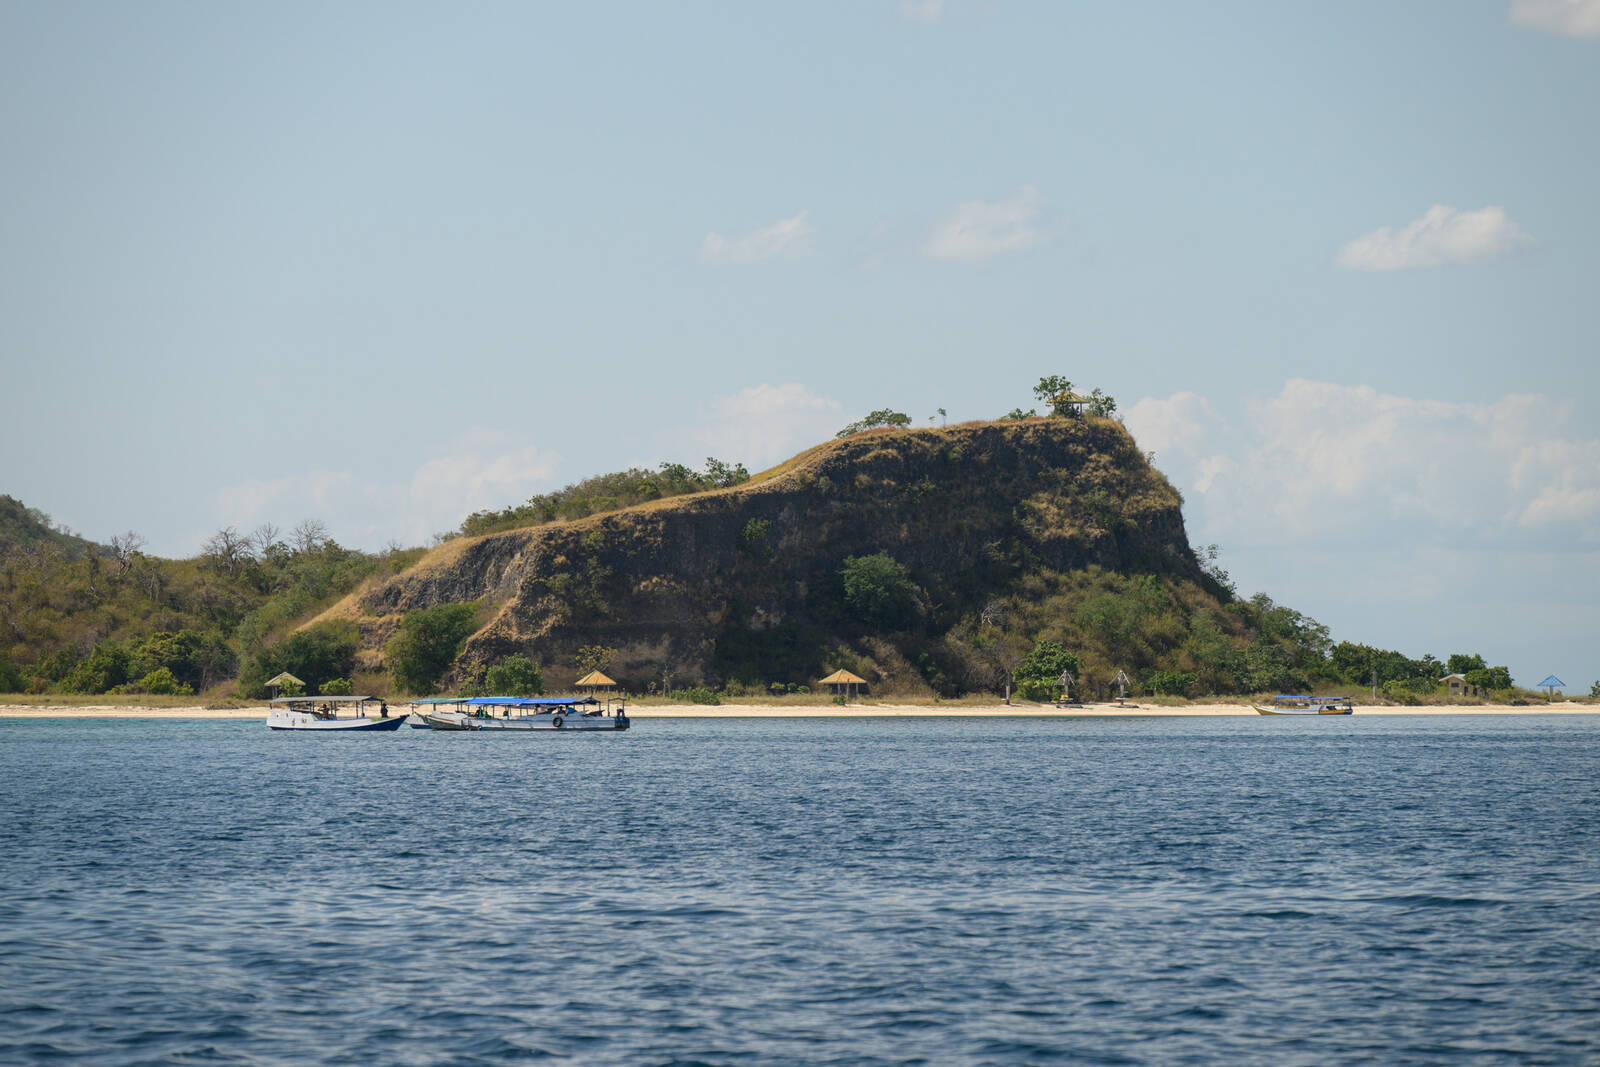 Image of 17 Islands National Park - Boat Trip by Luka Esenko